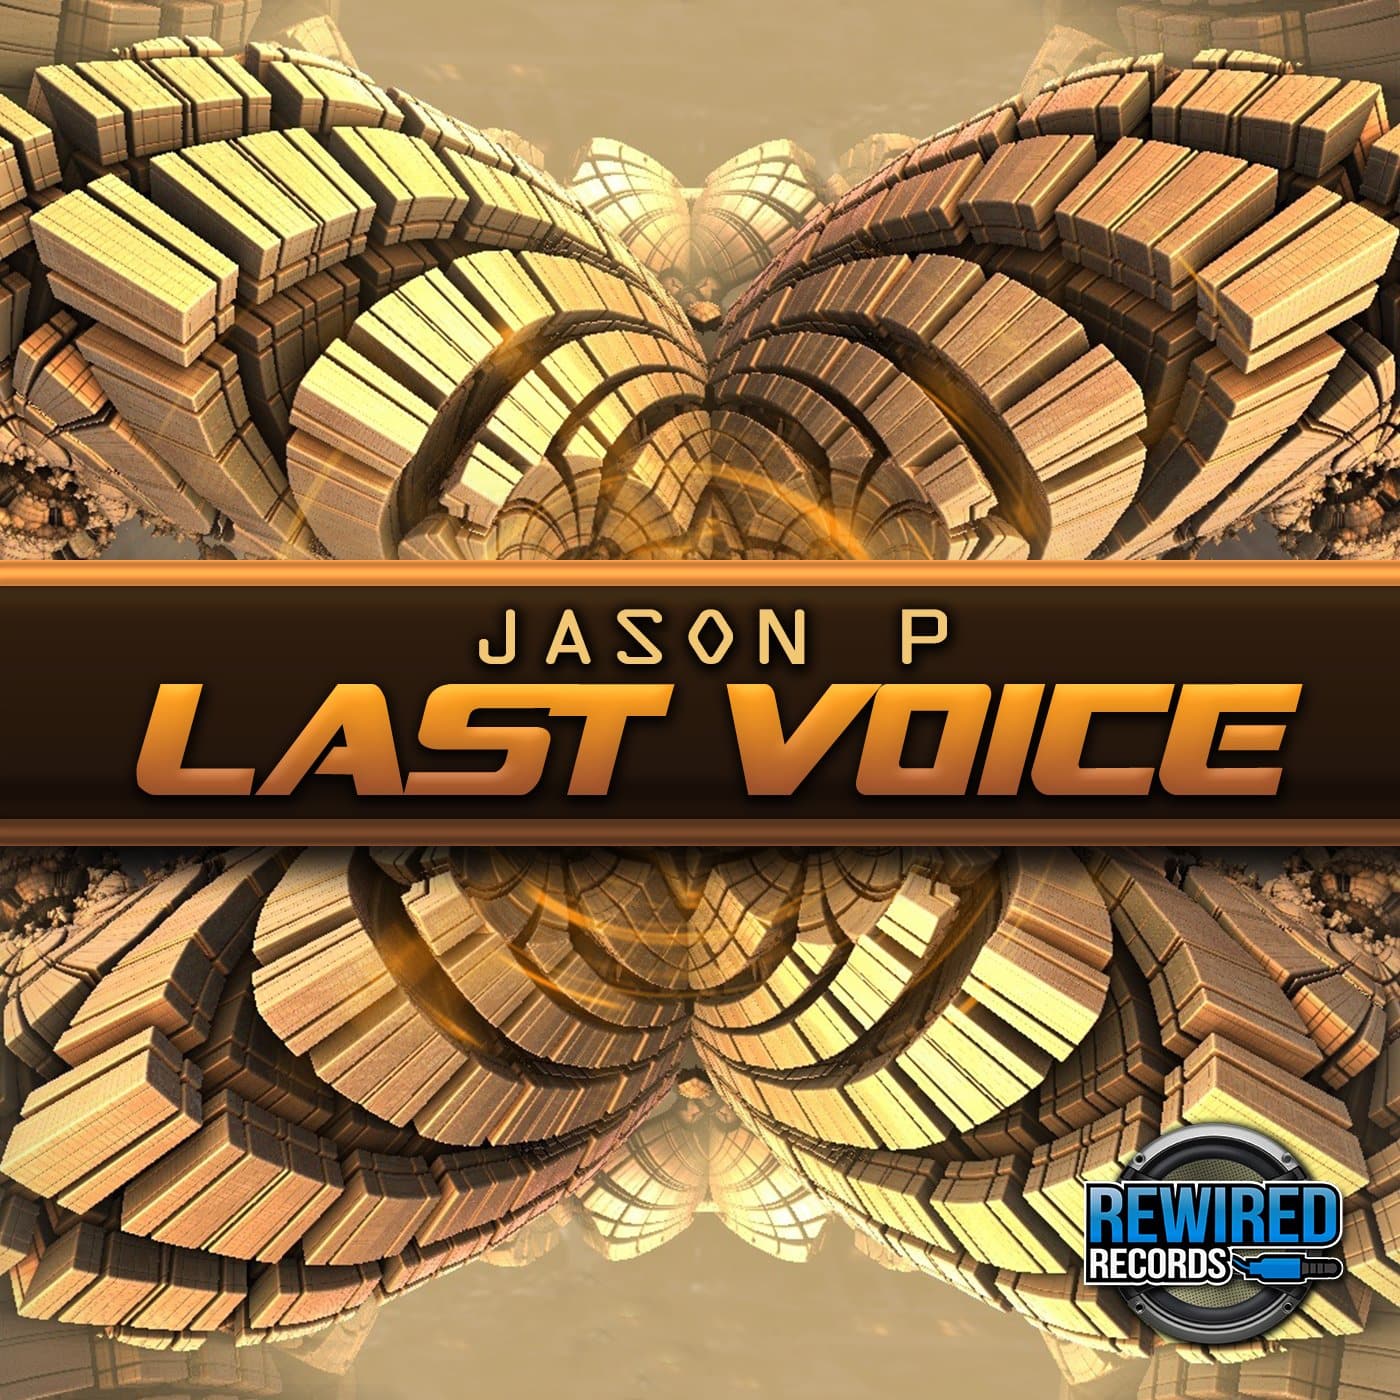 Jason P - Last Voice - Rewired Records